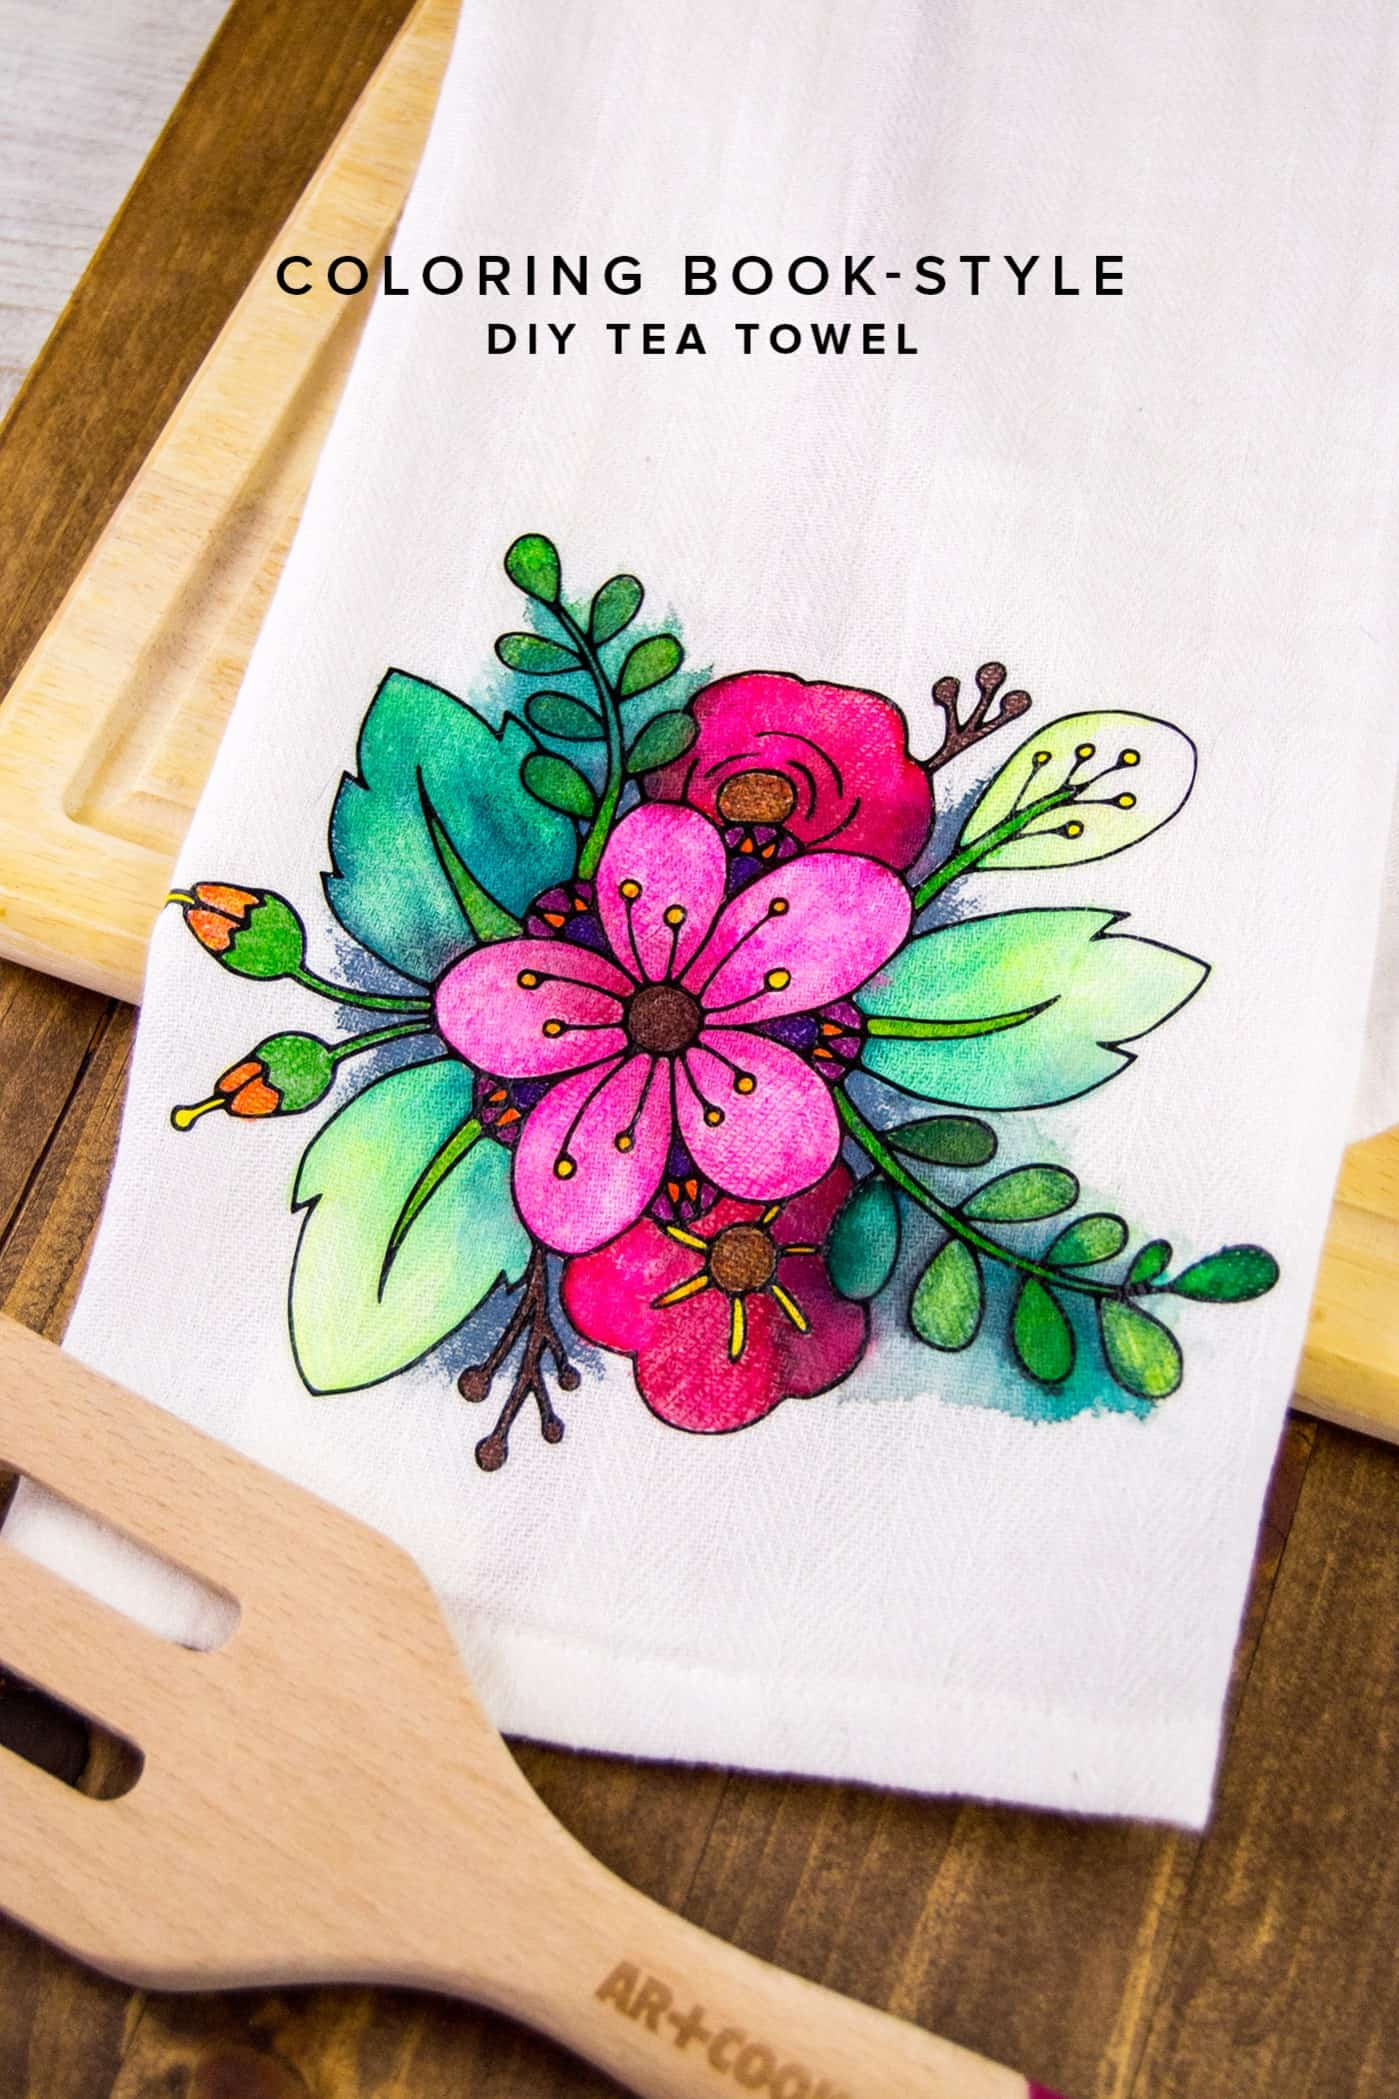 DIY Adult Coloring Book
 Floral Coloring Book Styled DIY Tea Towel DIY Candy